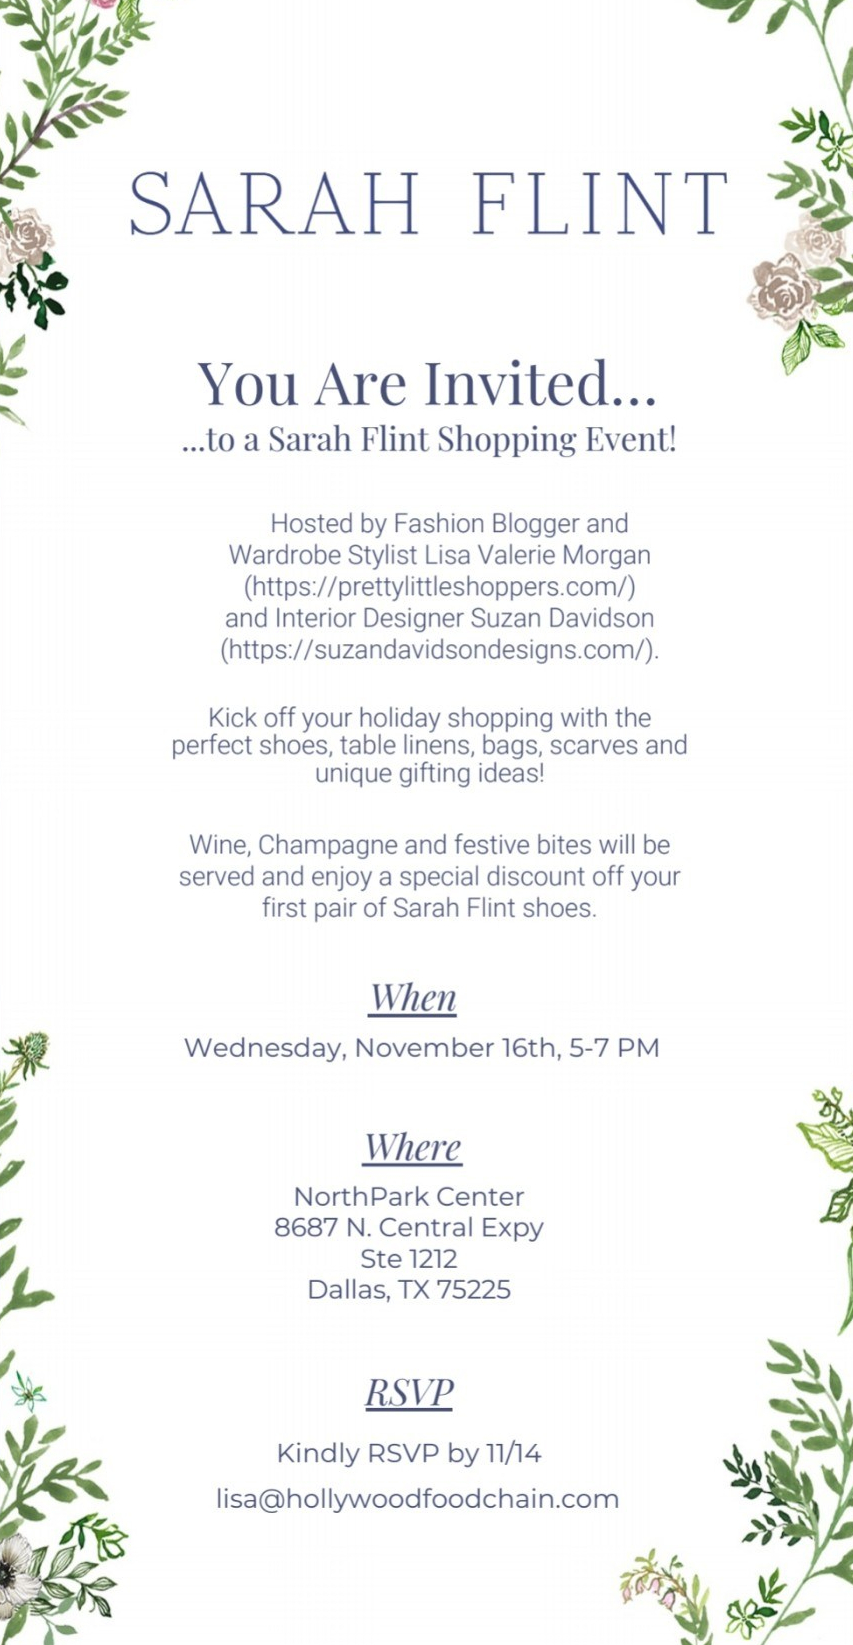 Sarah Flint Shopping Event at North Park Center Dallas